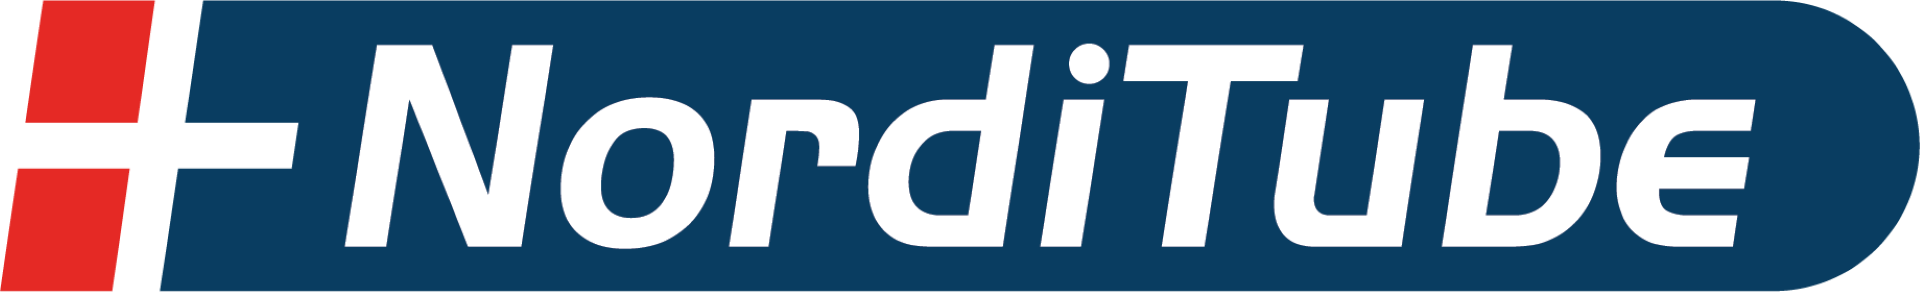 NordiTube-logo